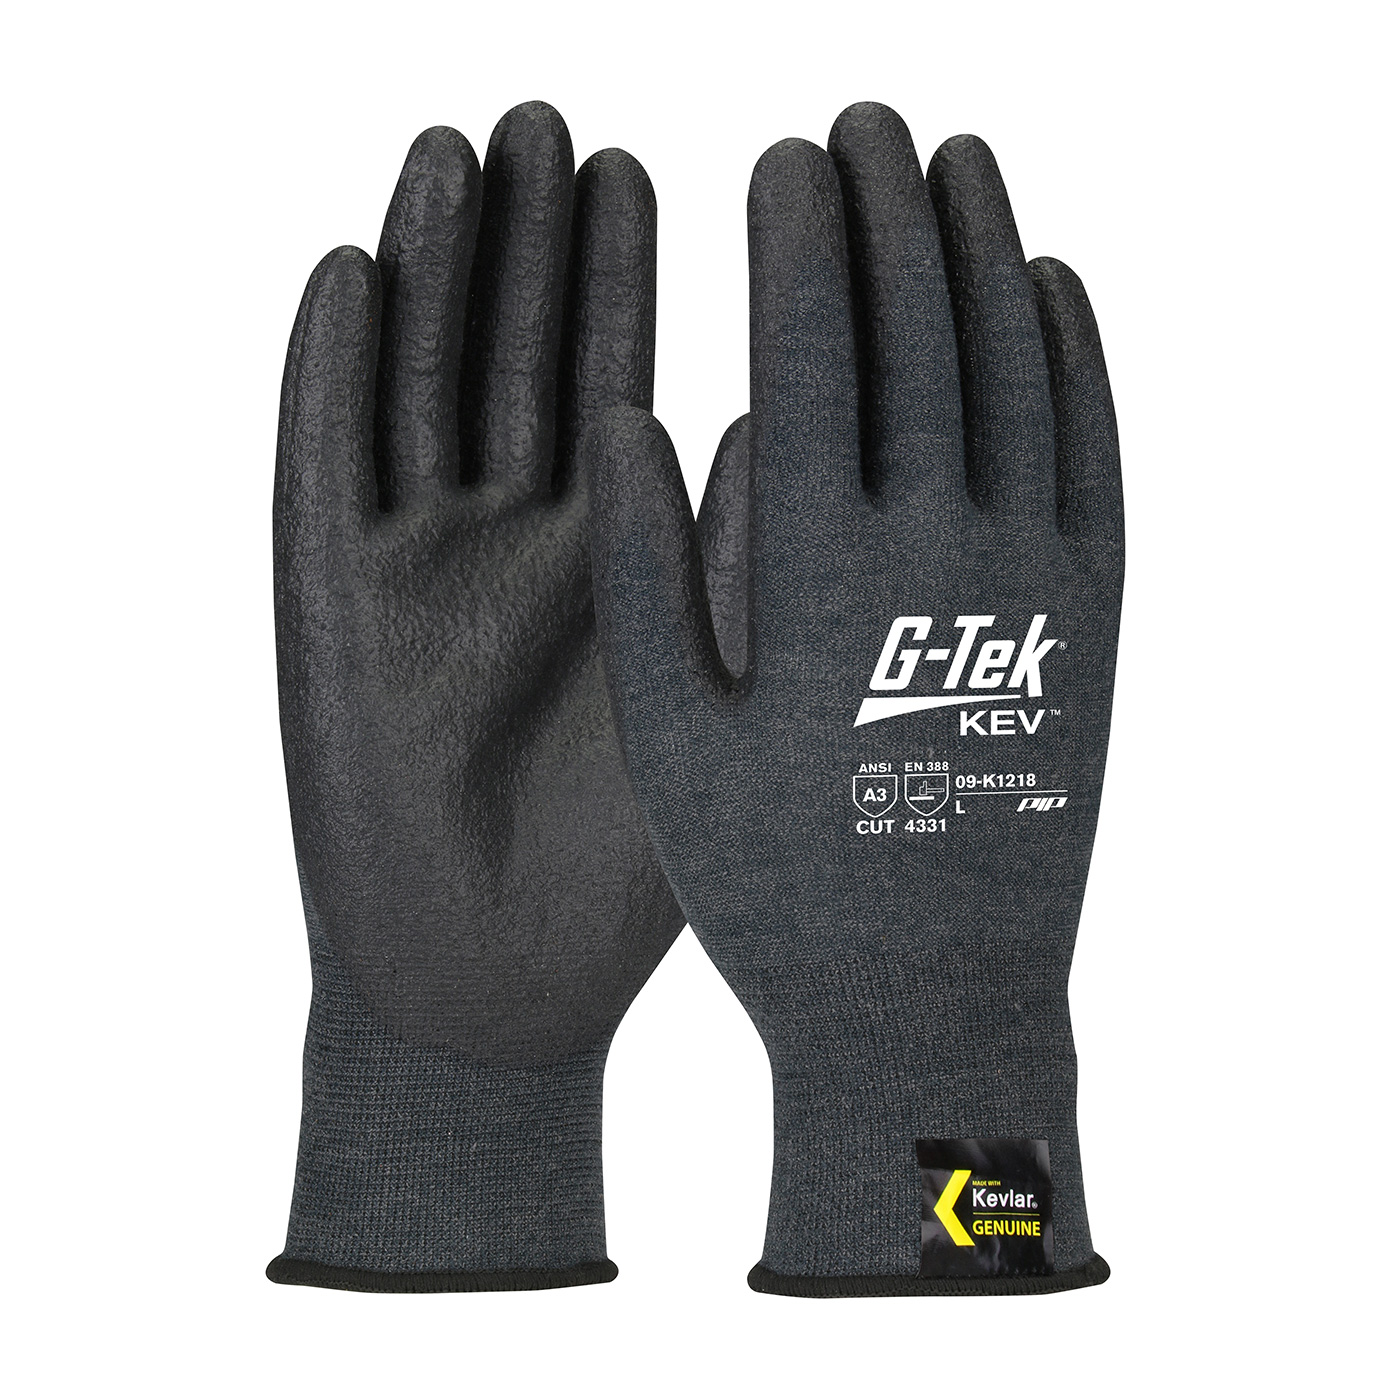 09-K1218 PIP® G-Tek® Kev™ Kevlar® NeoFoam Palm and Finger Coated Seamless Knit Gloves